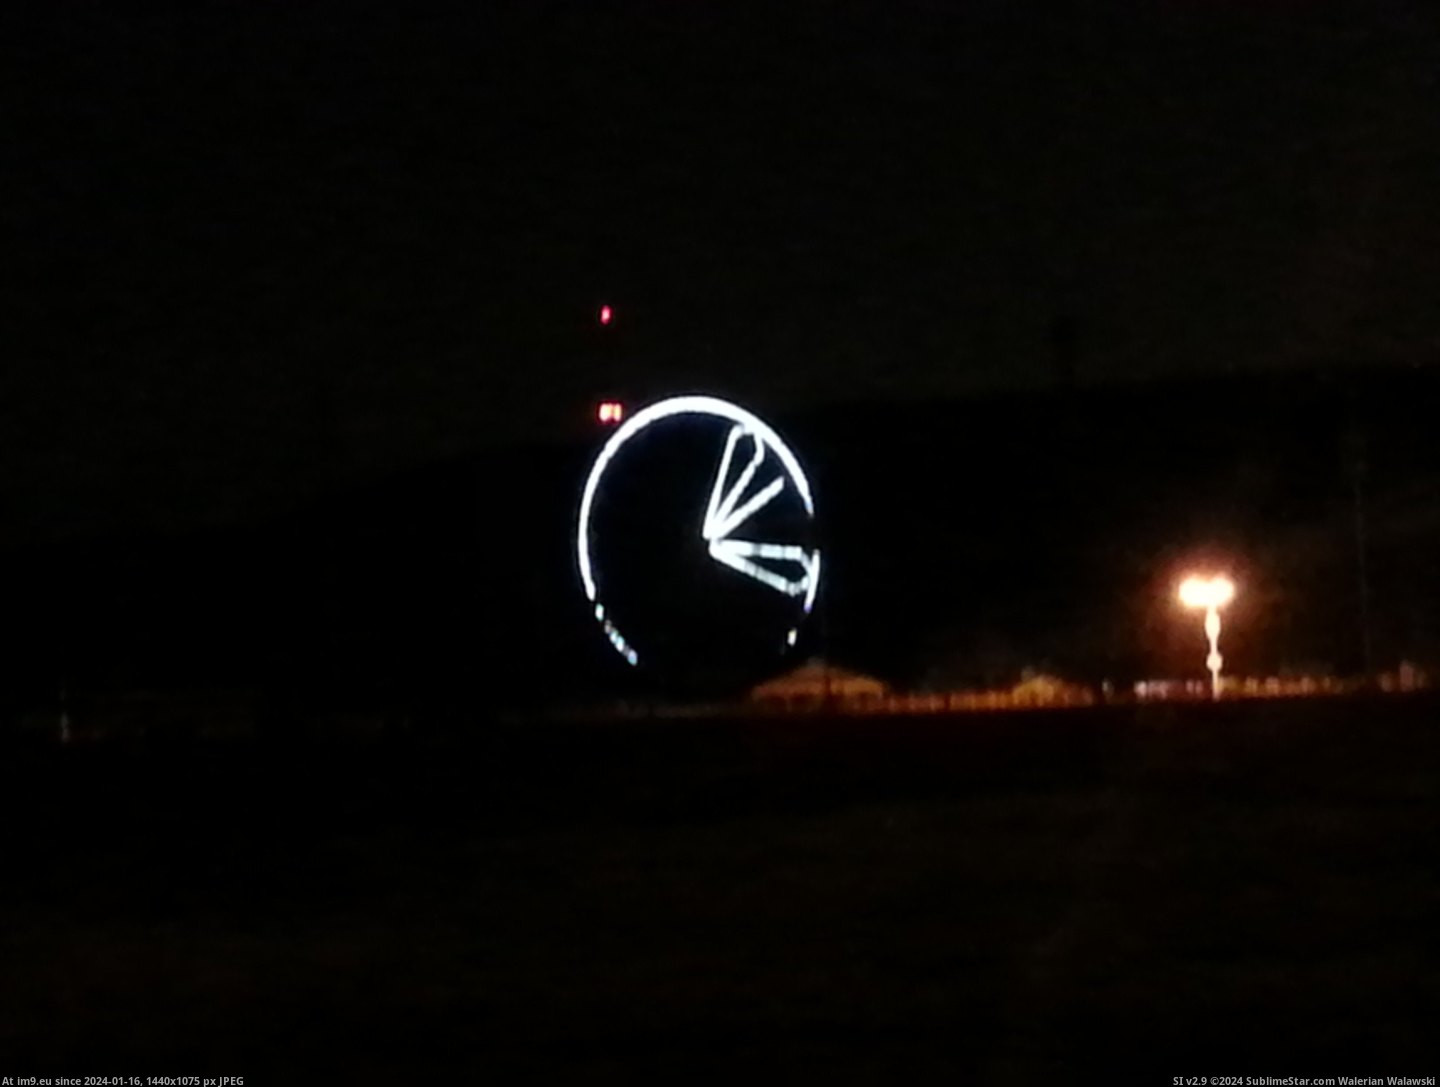 #Big #Night #Off #Clock #Wheel #Flags #Ferris #Season #Turns #Six [Mildlyinteresting] The ferris wheel at Six Flags turns into a big clock at night in the off season. Pic. (Изображение из альбом My r/MILDLYINTERESTING favs))